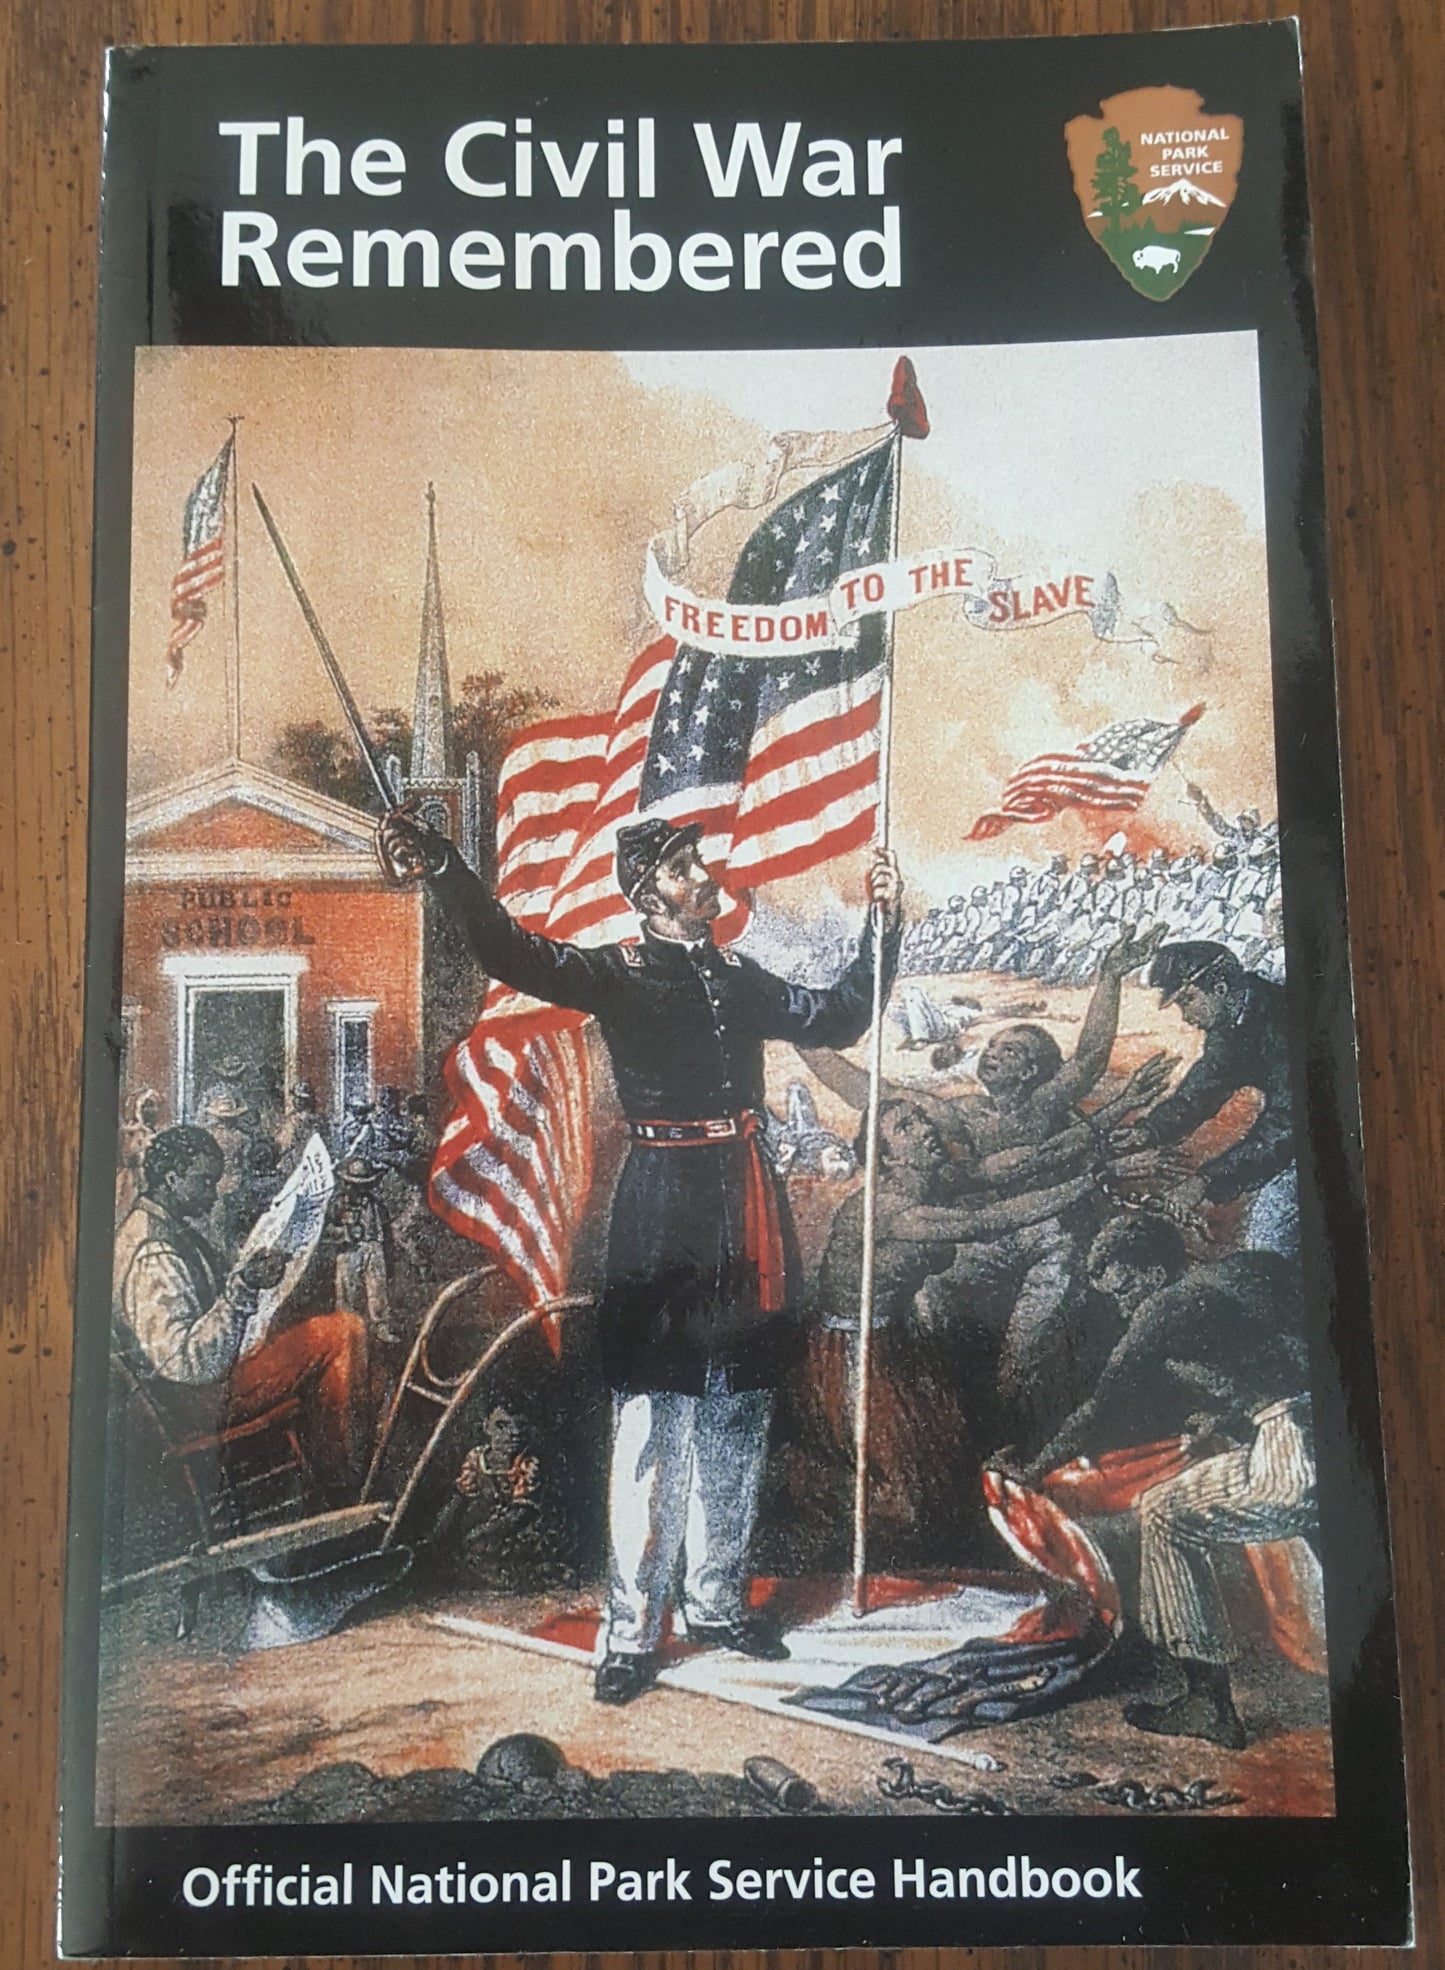 The Civil War Remembered